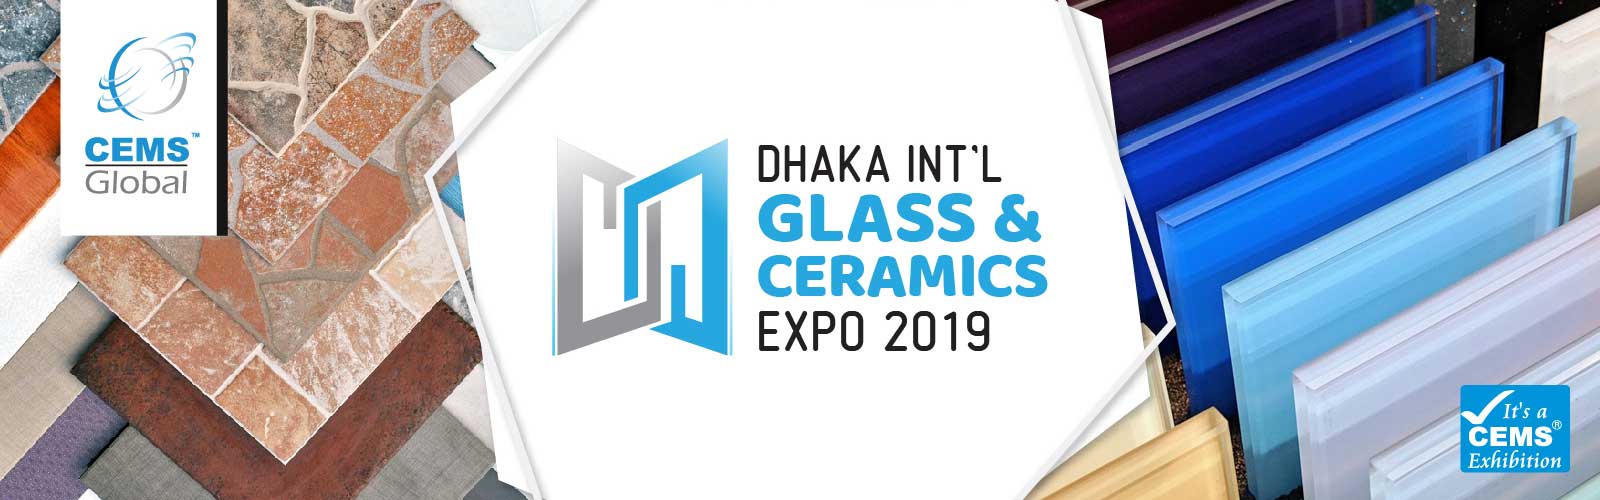  Dhaka International Glass & Ceramics Expo 2019